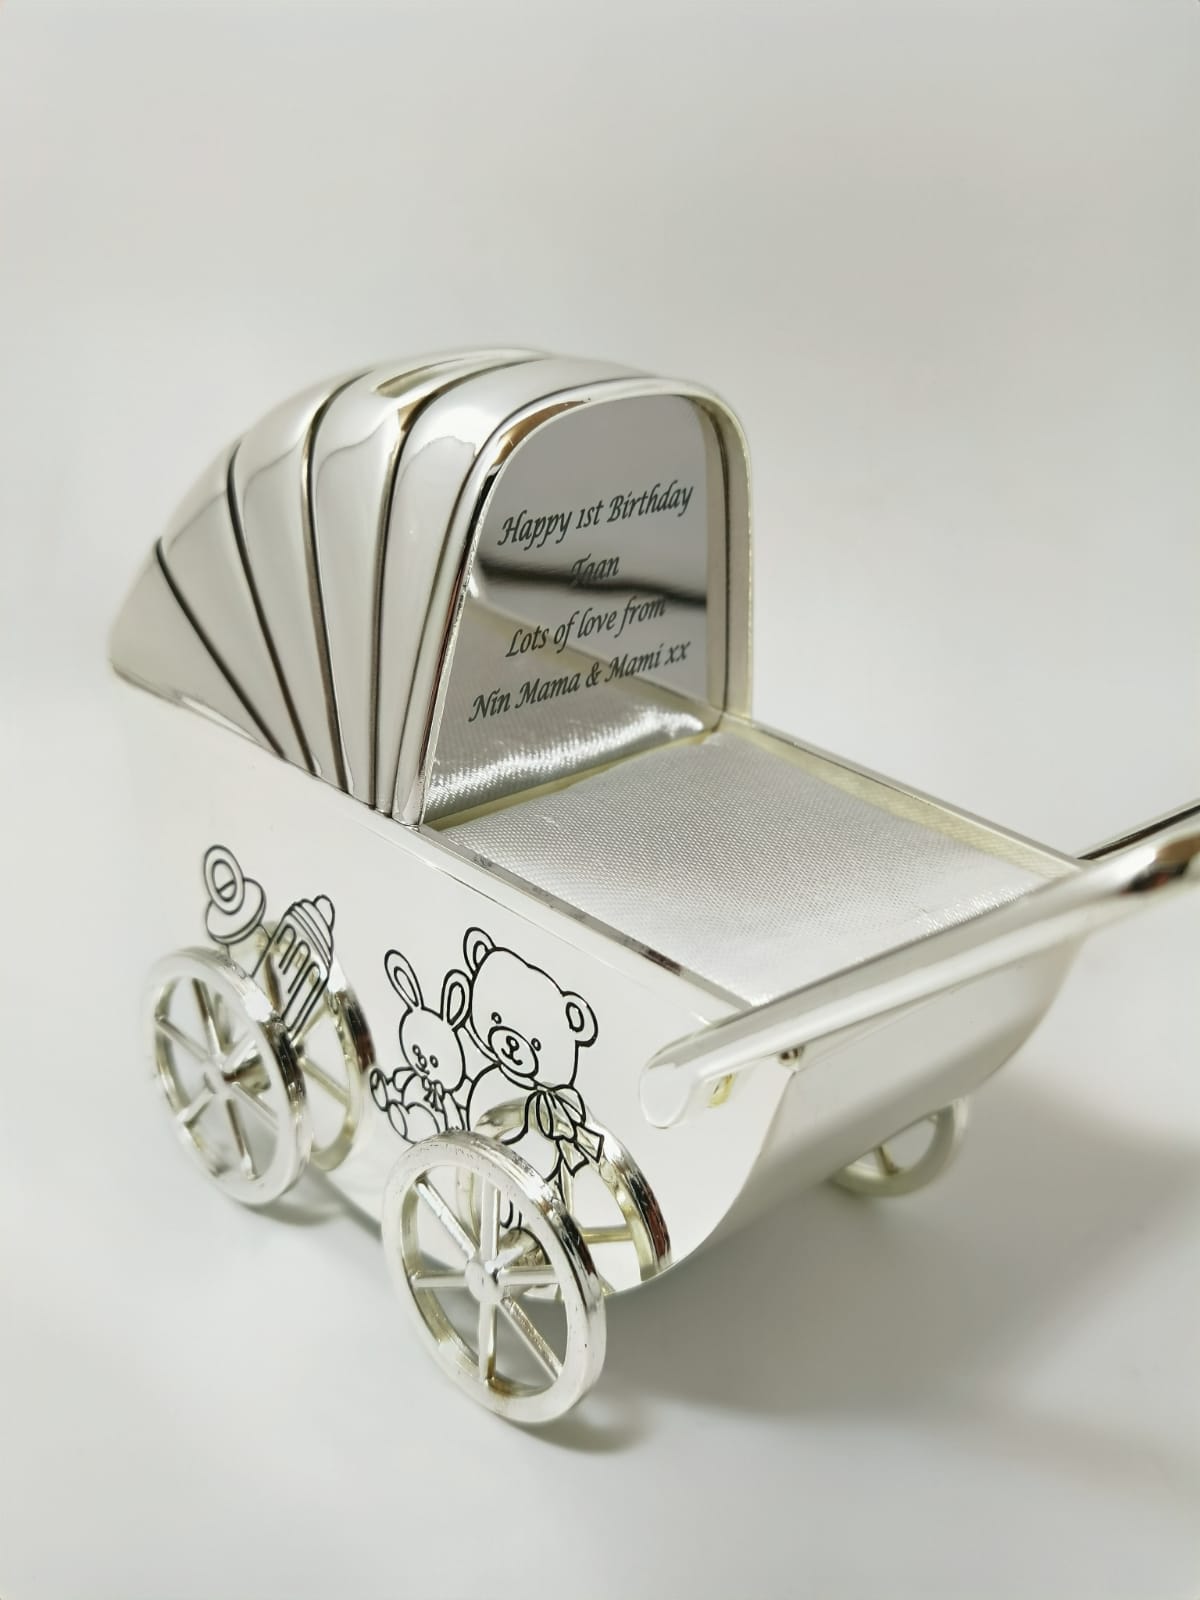 Personalised Pram Money Box, Silver Plated